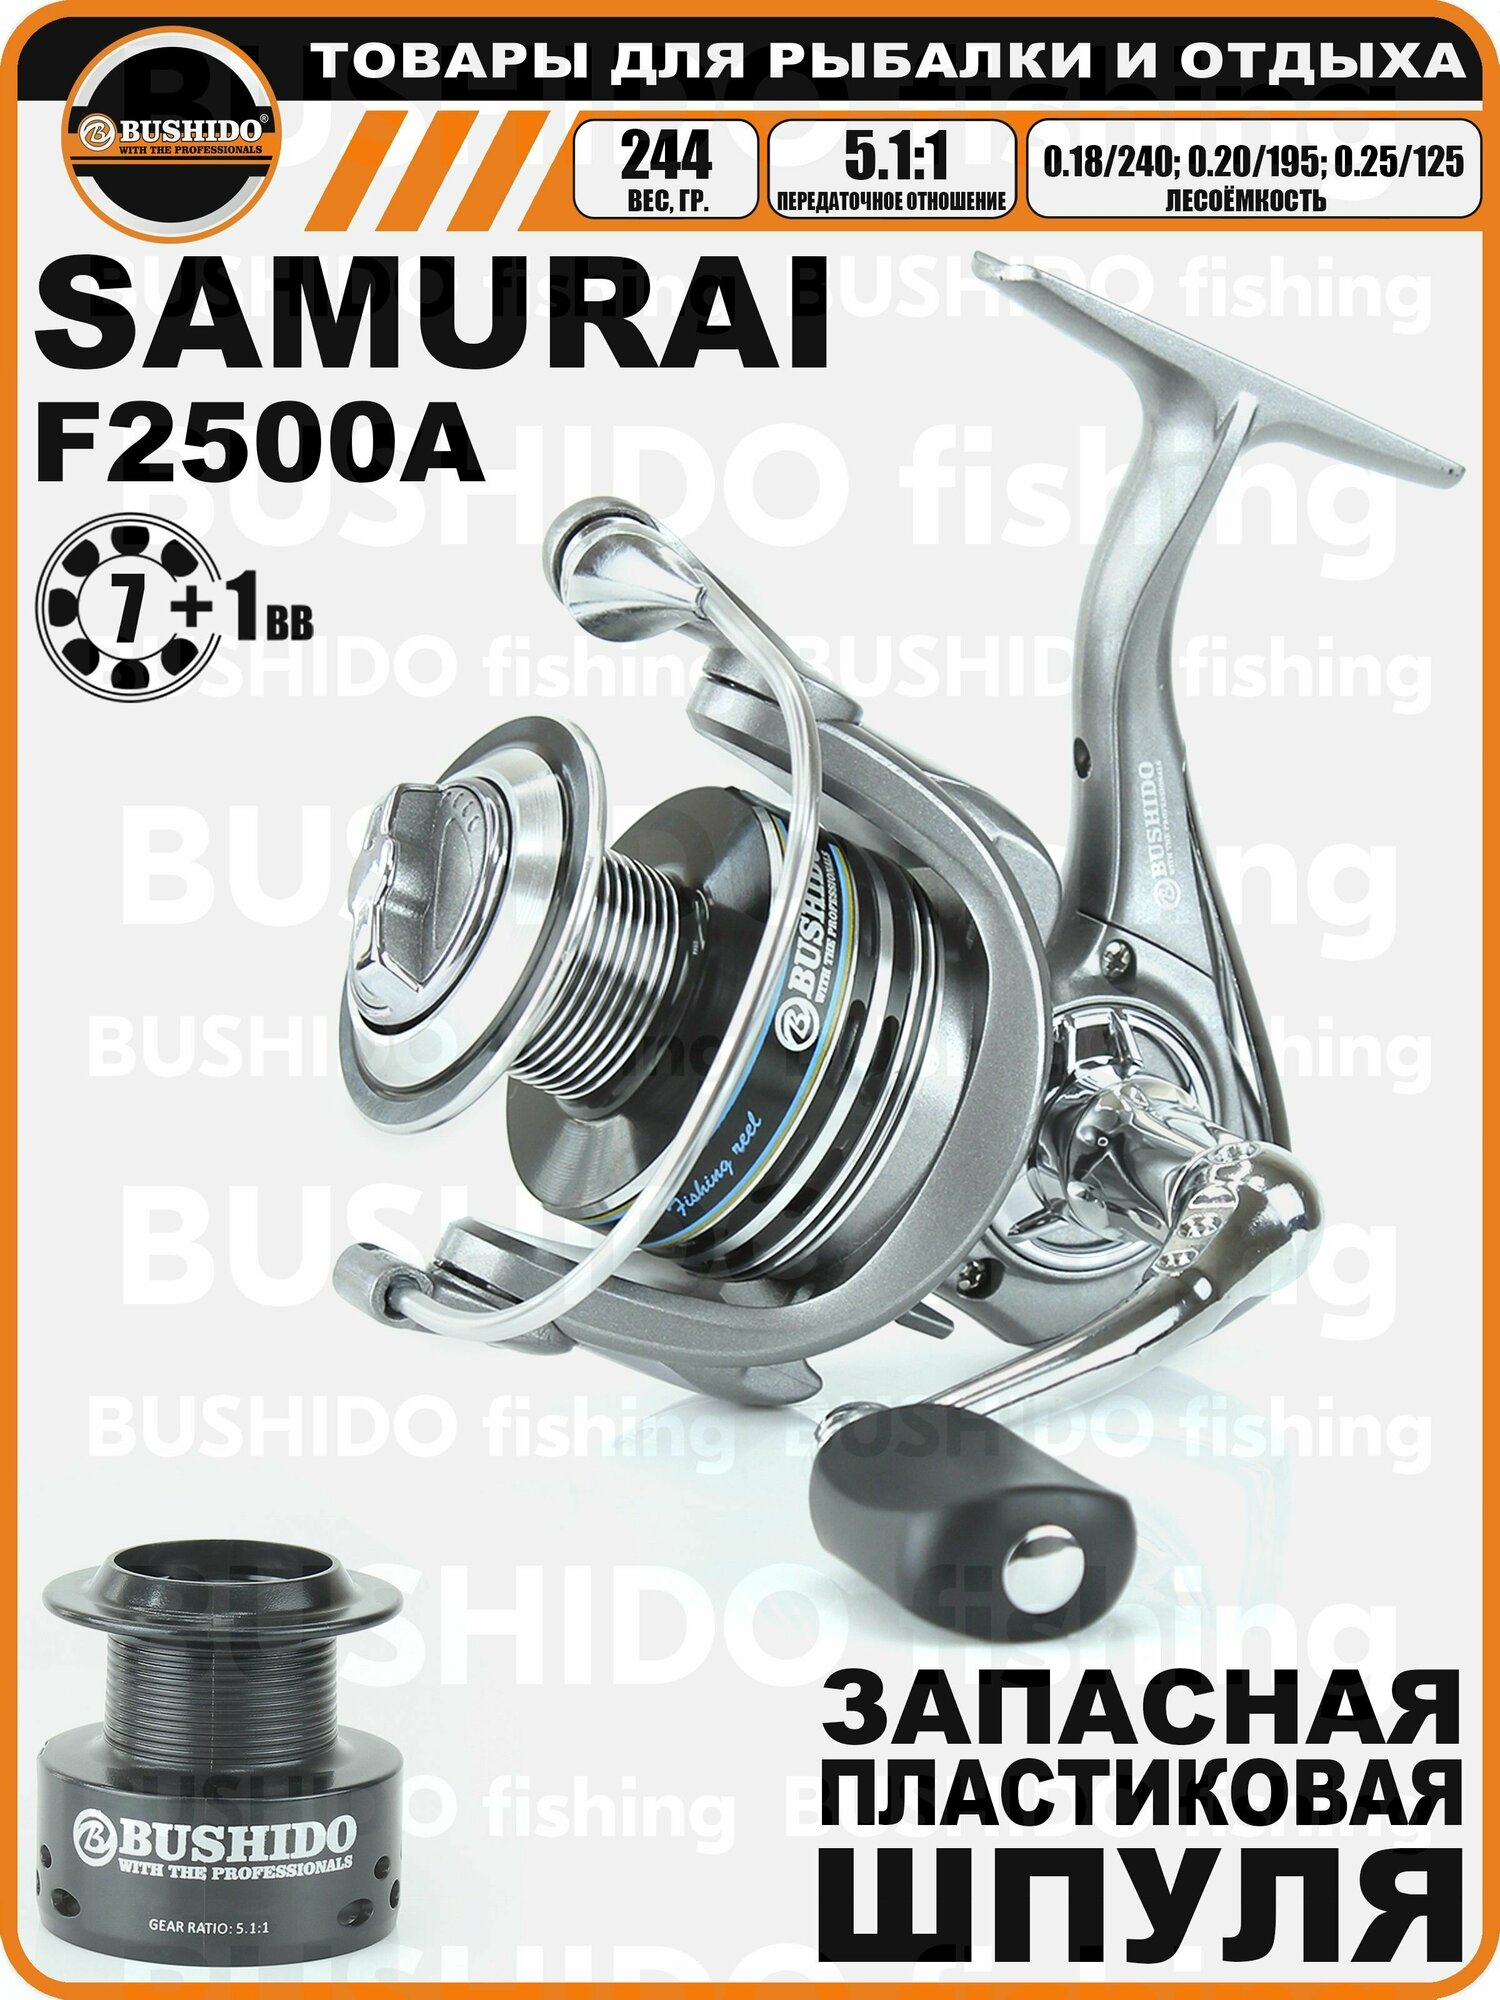 Катушка рыболовная BUSHIDO SAMURAI F2500A (7+1BB) (запас. пласт. шпуля)